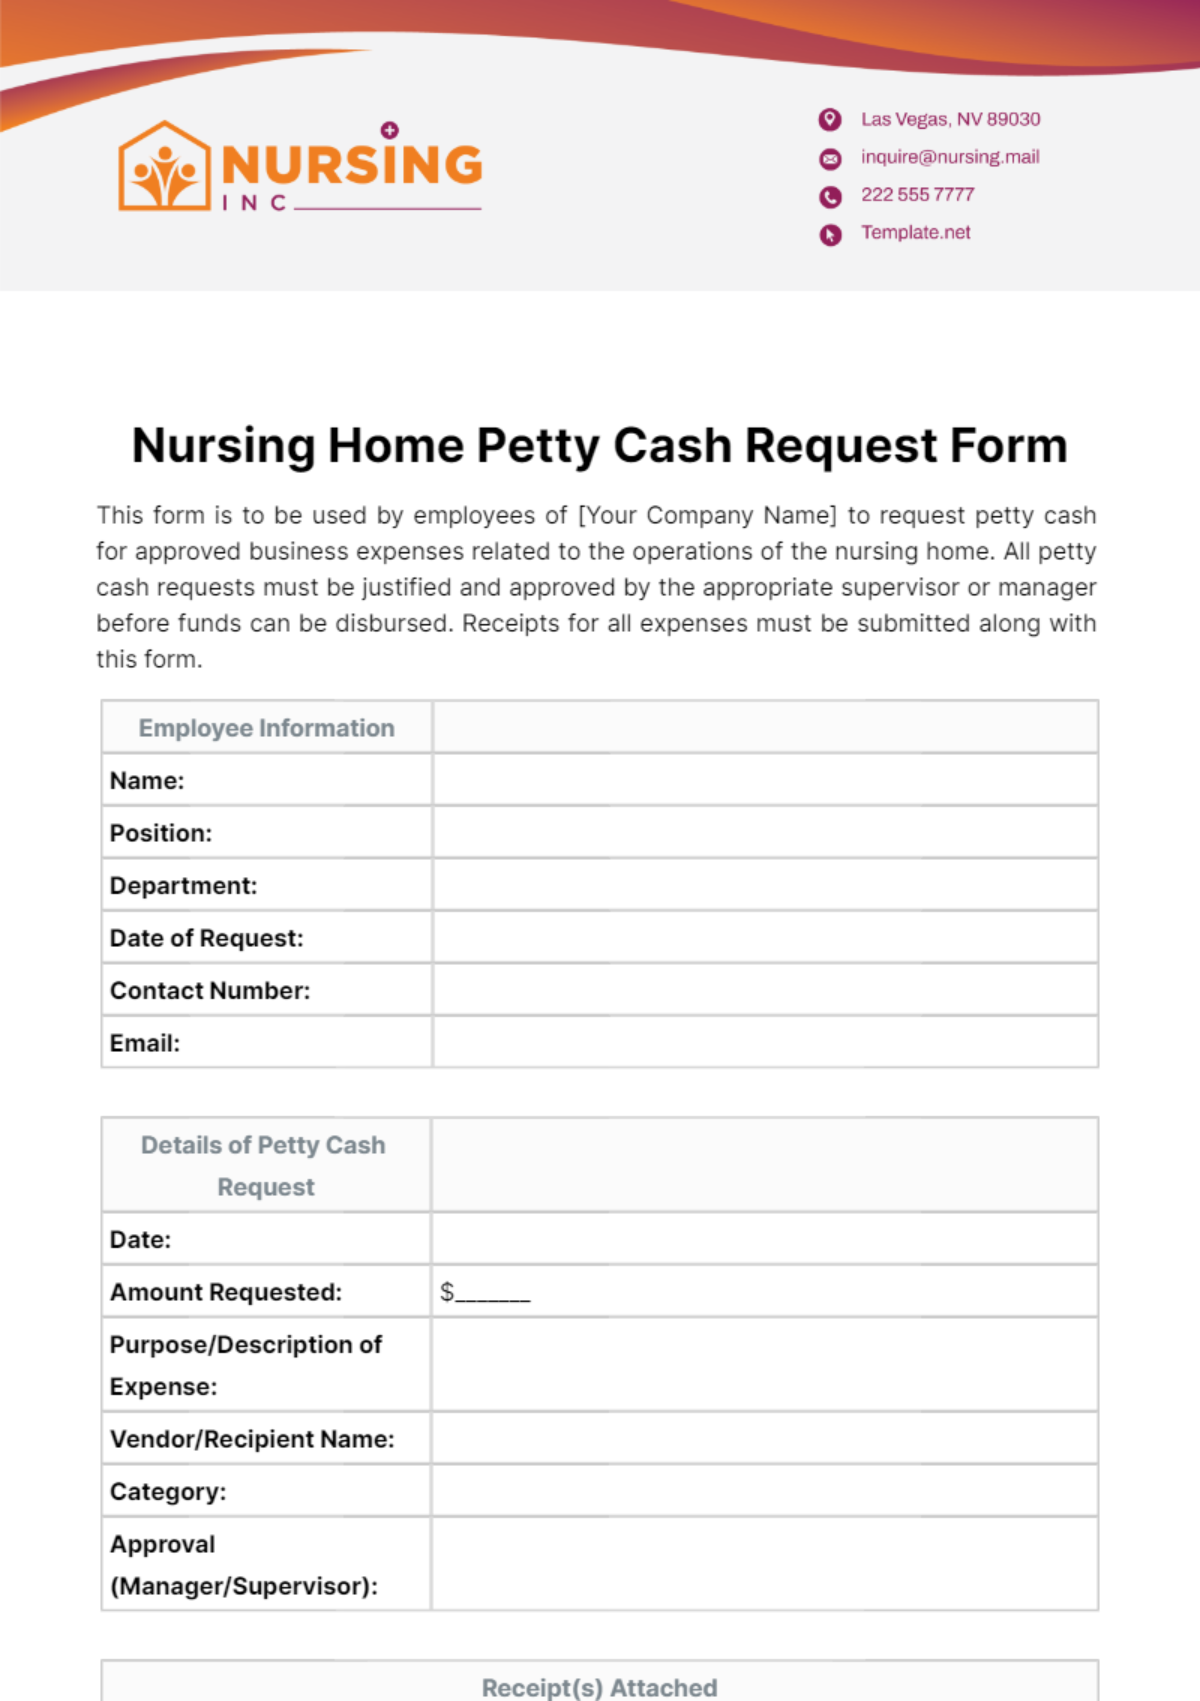 Nursing Home Petty Cash Request Form Template